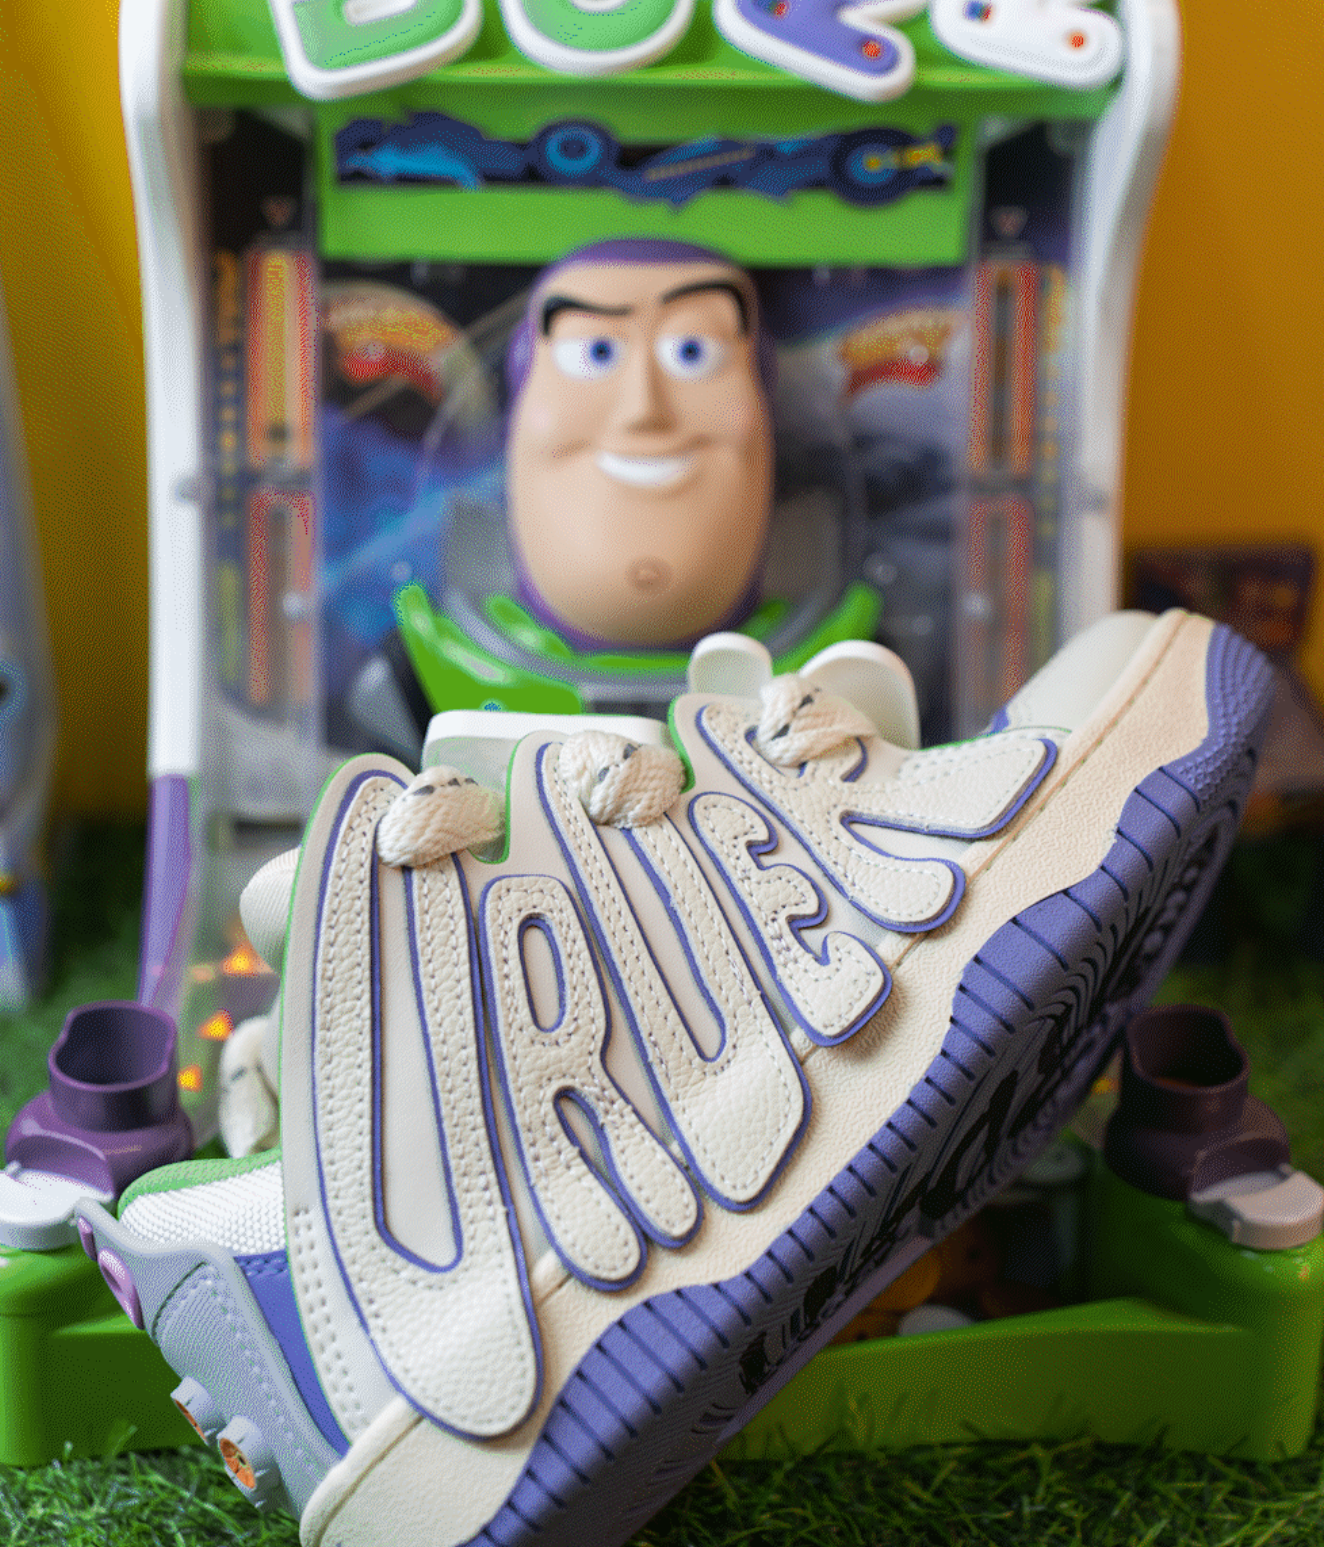 Vans Toy Story Old Skool Buzz Lightyear Shoe – Red Zone